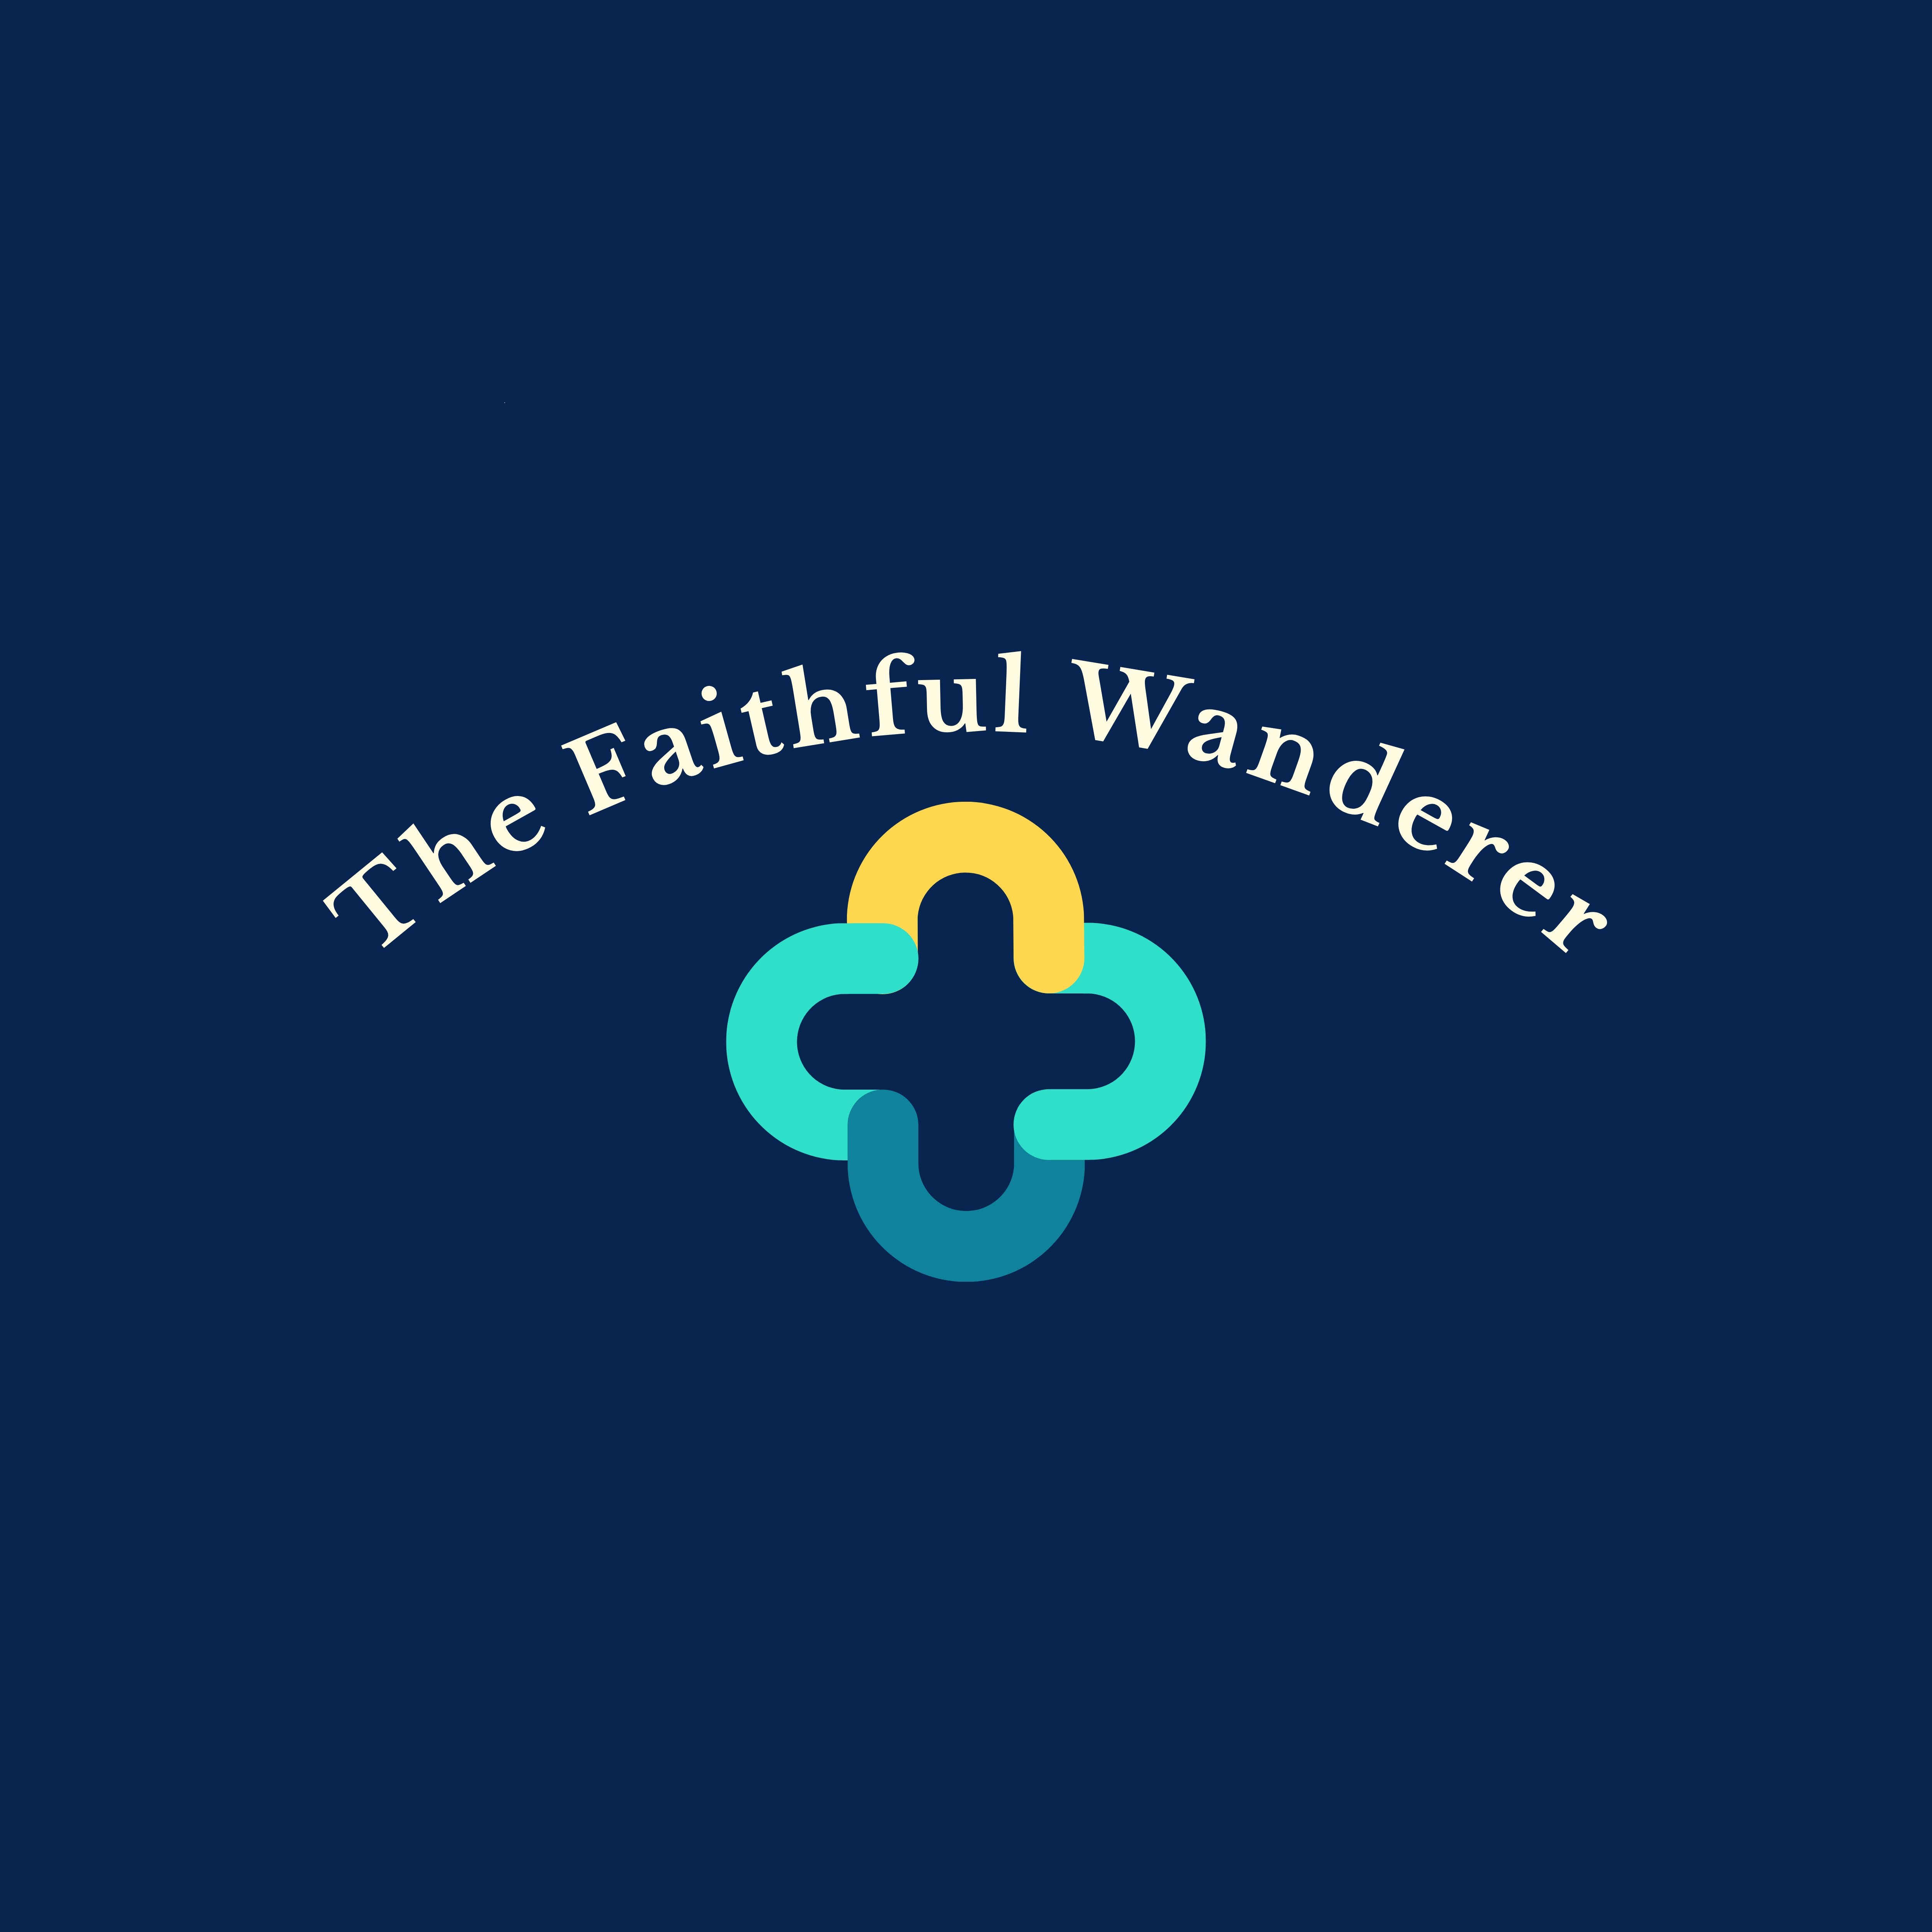 Don't be a Tumbleweed » The Faithful Wanderer